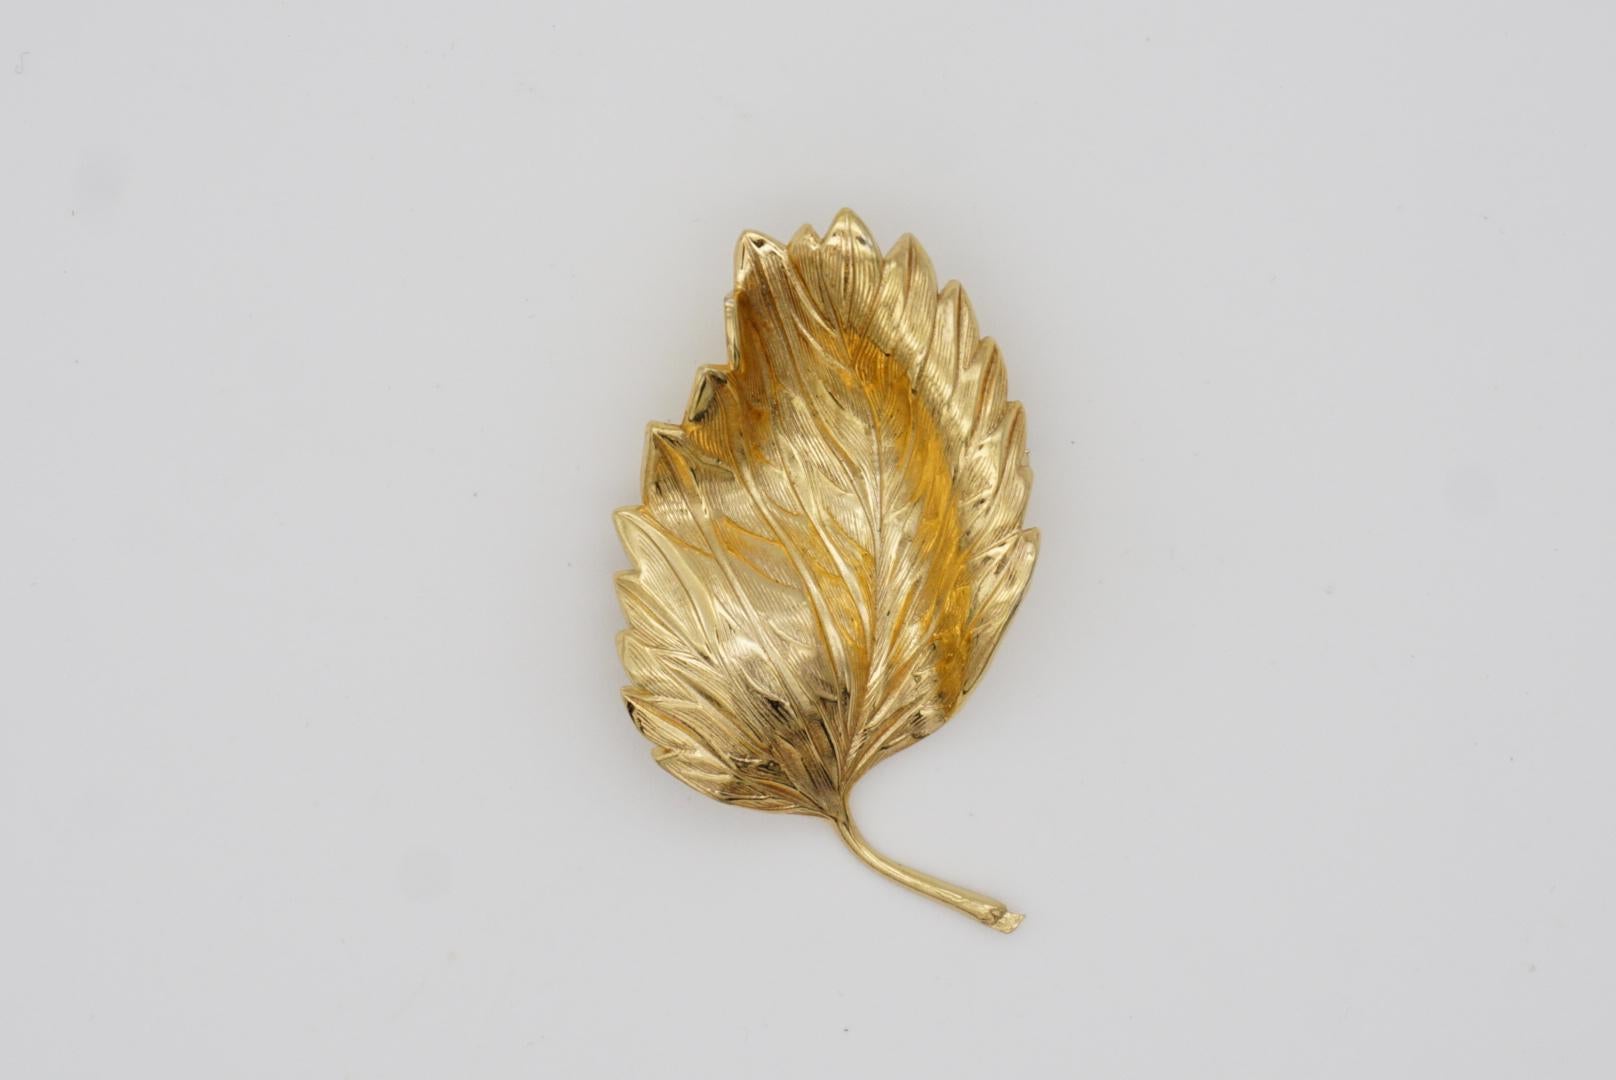 Christian Dior GROSSE 1967 Vintage Autumn Wave Wind Fallen Leaf Gold Brooch In Excellent Condition For Sale In Wokingham, England